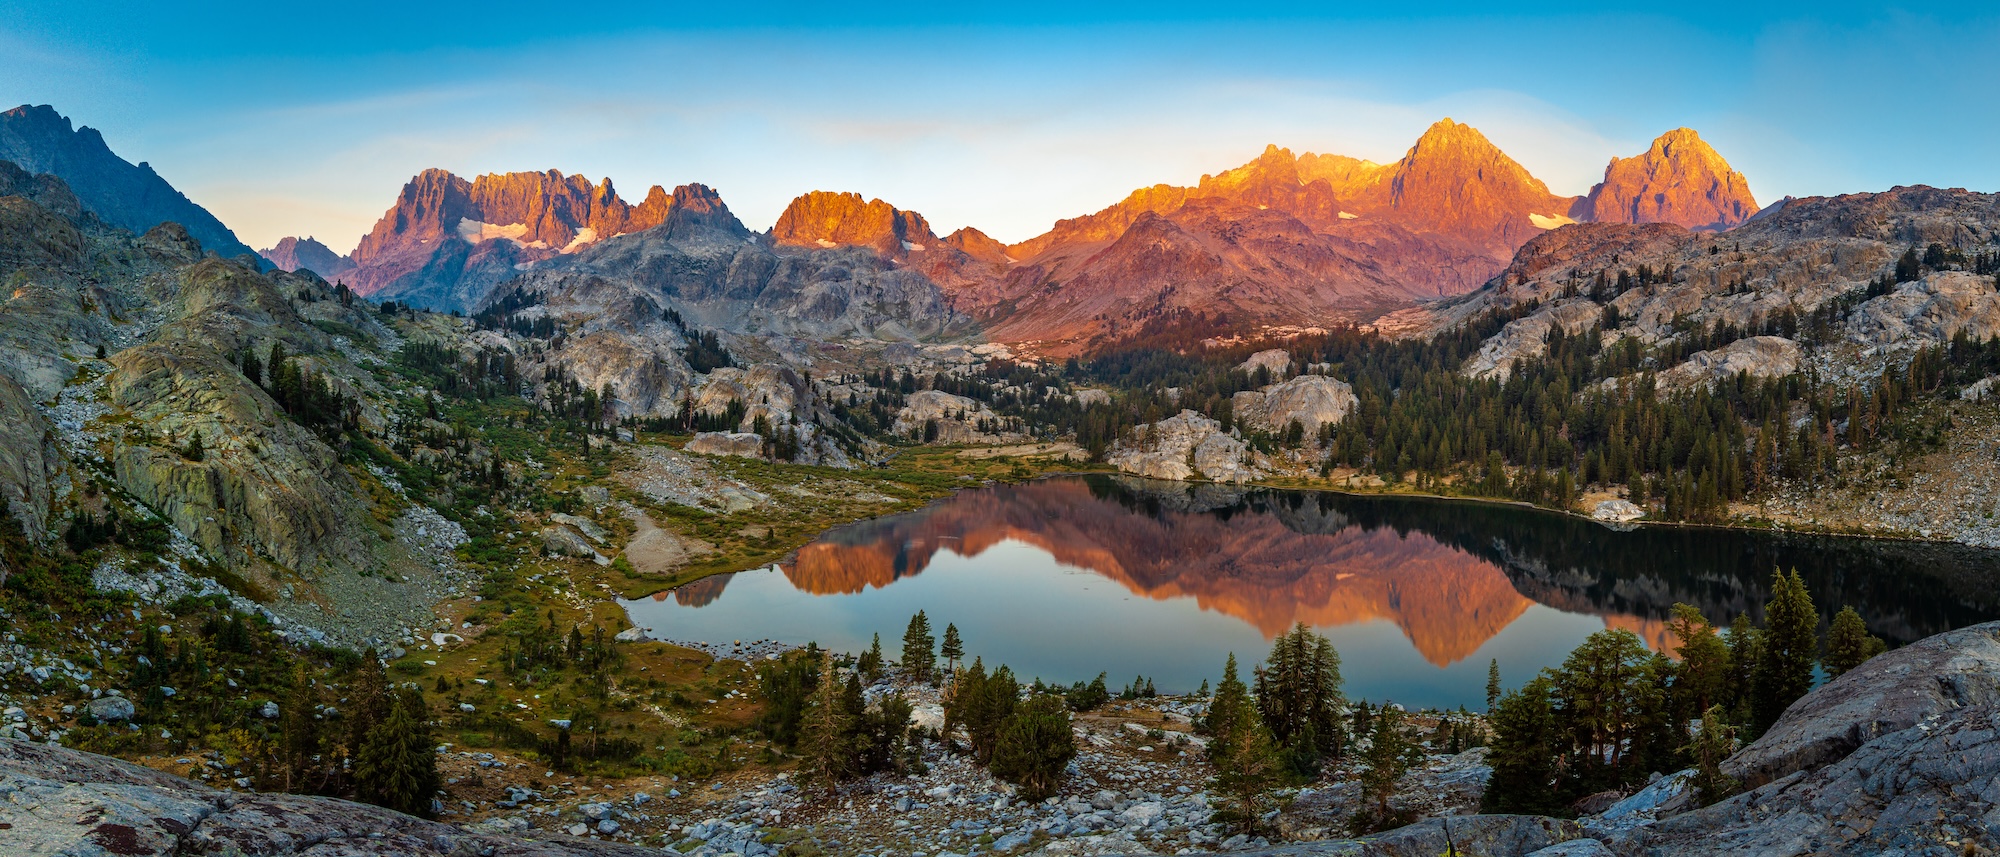 Epic panorama of Ediza Lake in the Sierras. Photo by Brock Dallman